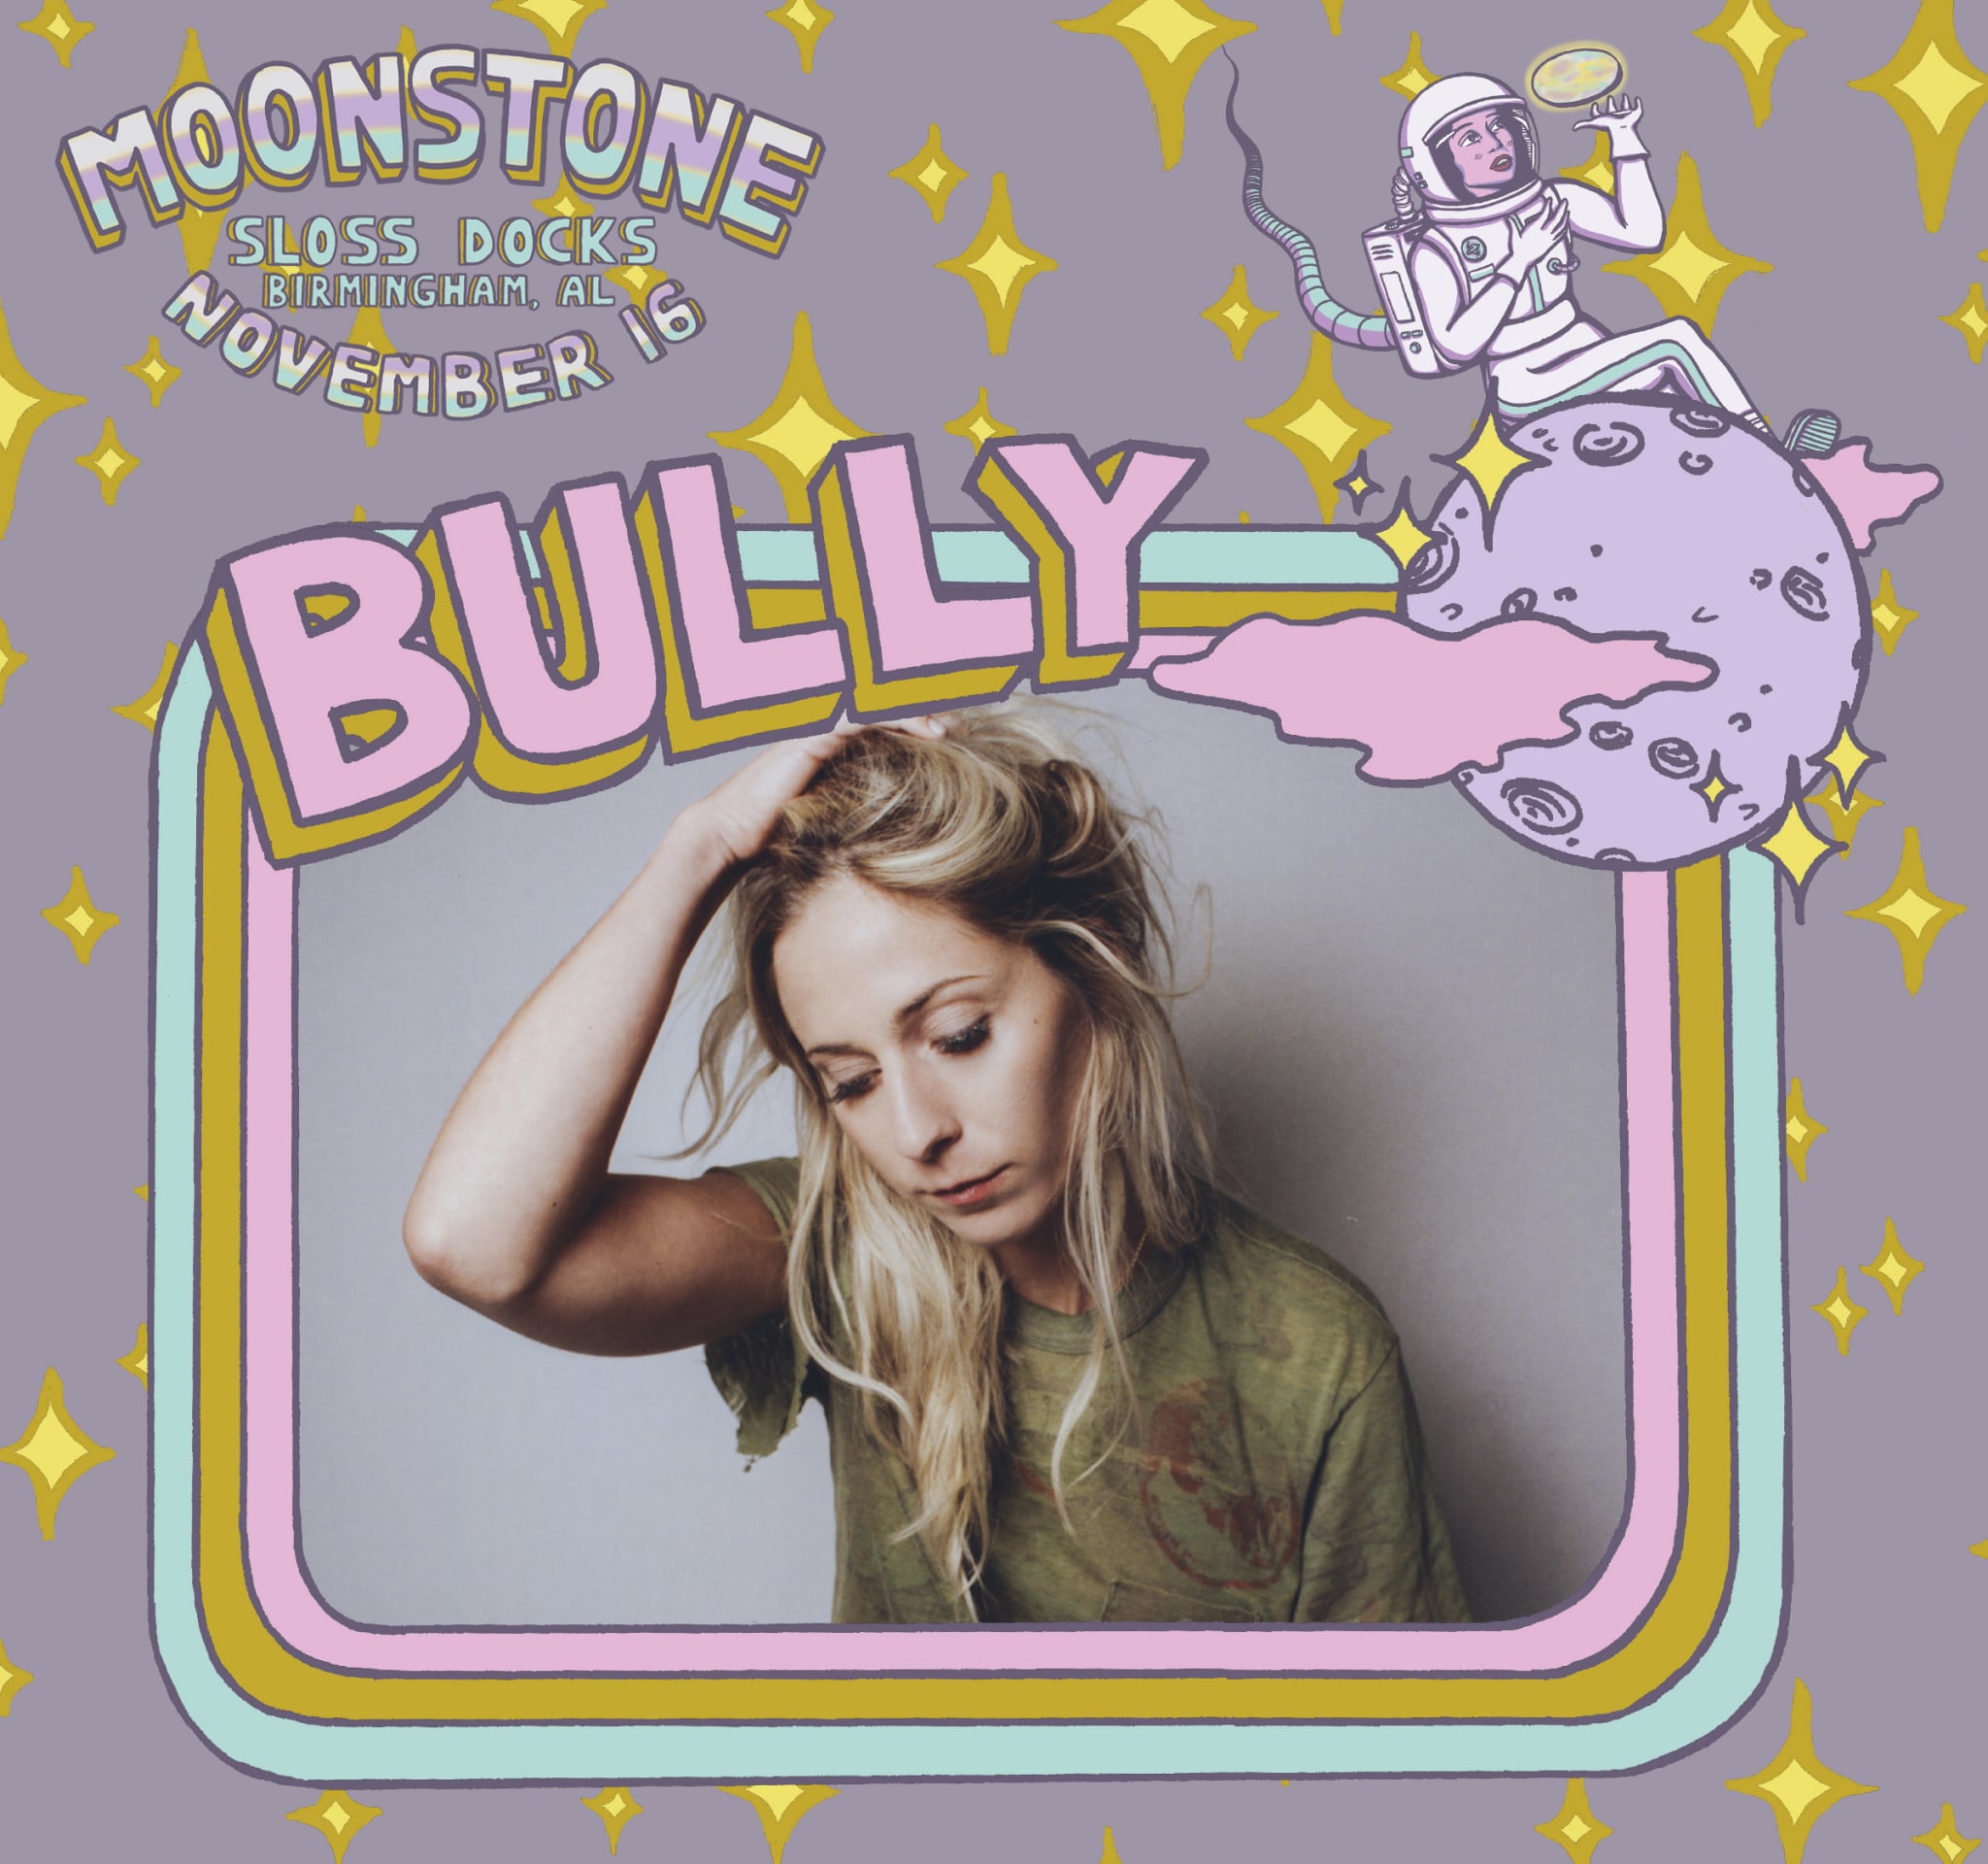 bully annouce Moonstone Festival, a female focused music and arts fest, happening Nov. 16th at Sloss Docks. Win VIP tickets!